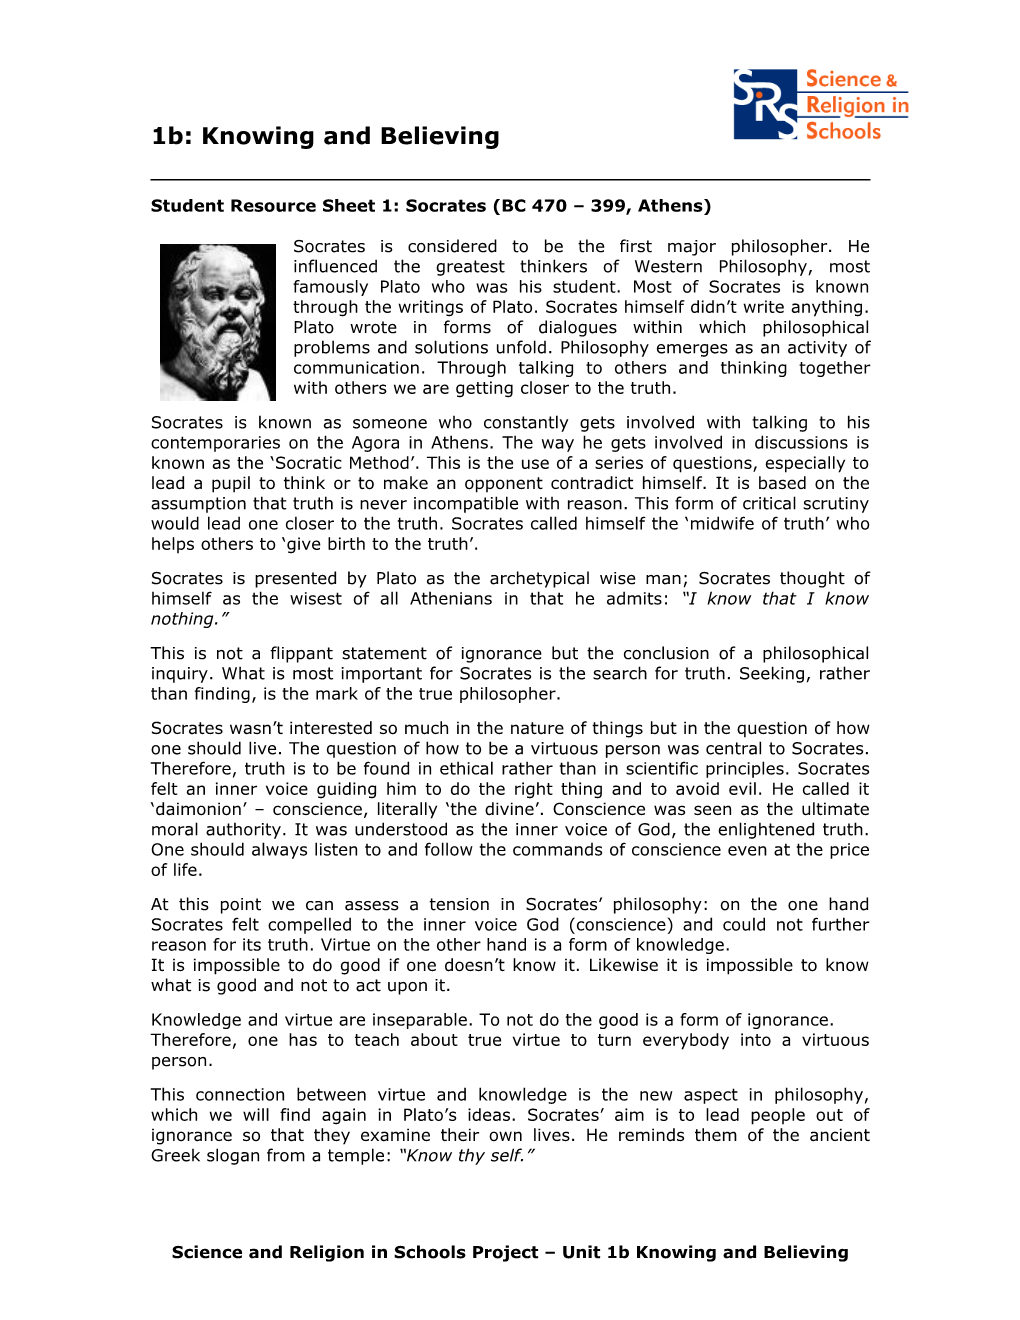 Student Resource Sheet 1: Socrates (BC 470 399, Athens)